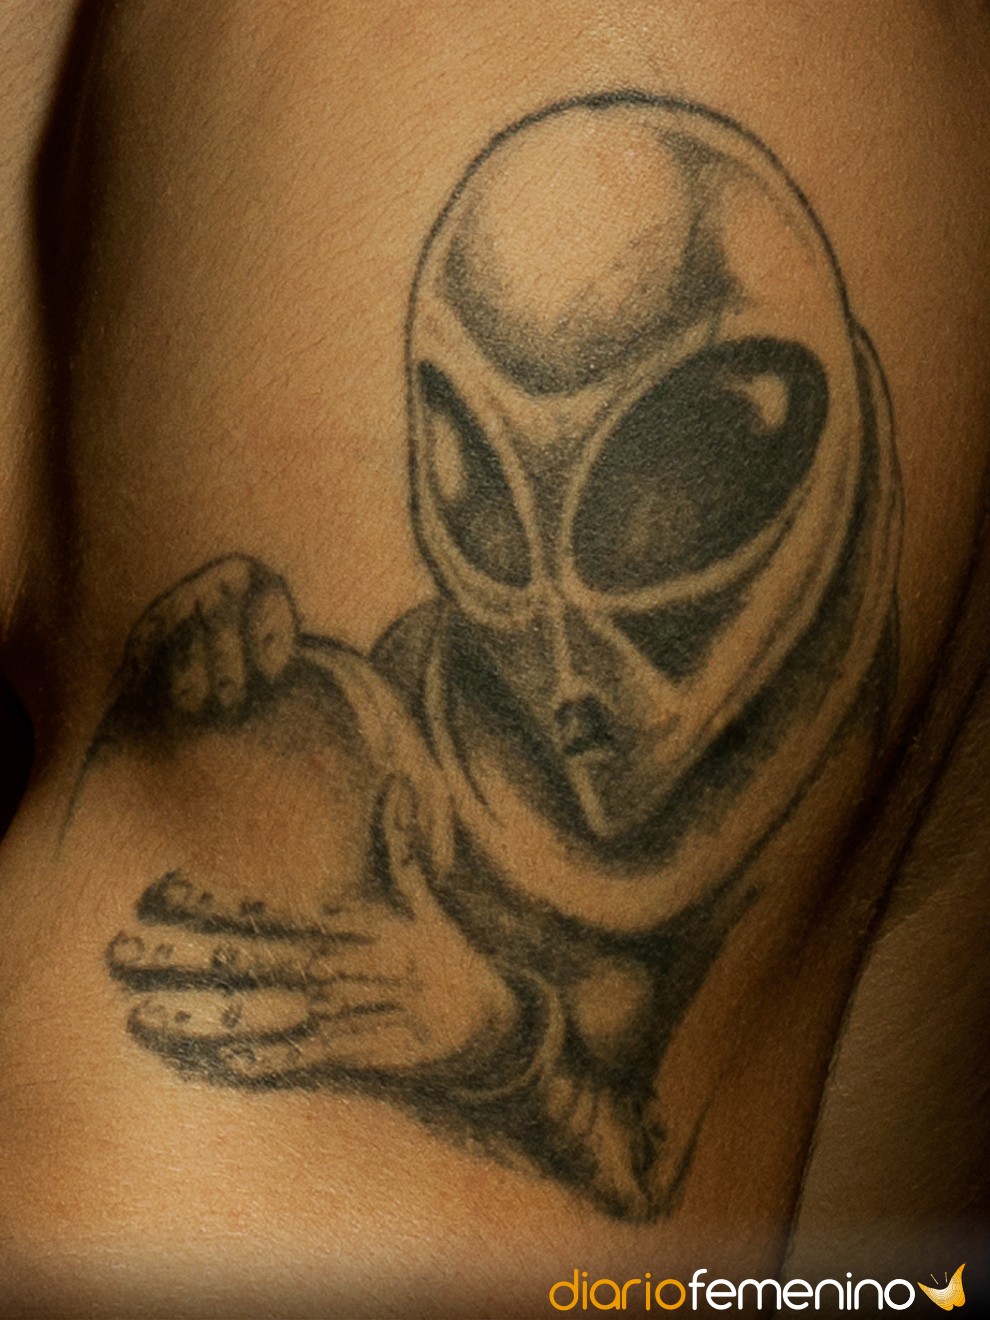 Tatuagem alienígena fumando